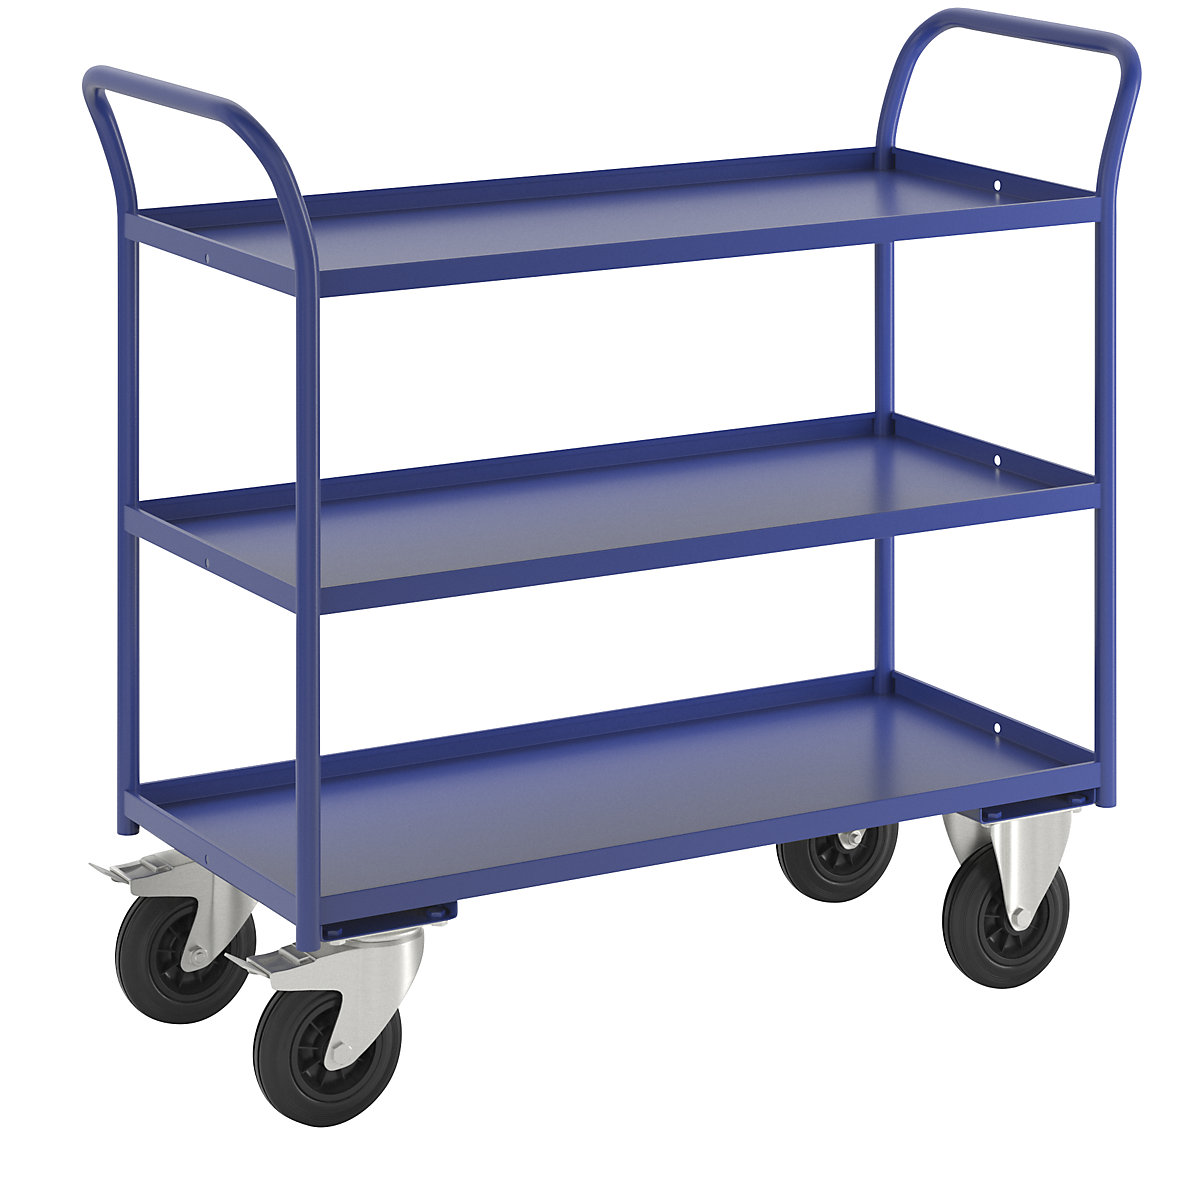 KM41 table trolley – Kongamek, 3 shelves with raised edges, LxWxH 1080 x 450 x 1000 mm, blue, 2 swivel castors with stops, 2 fixed castors-8